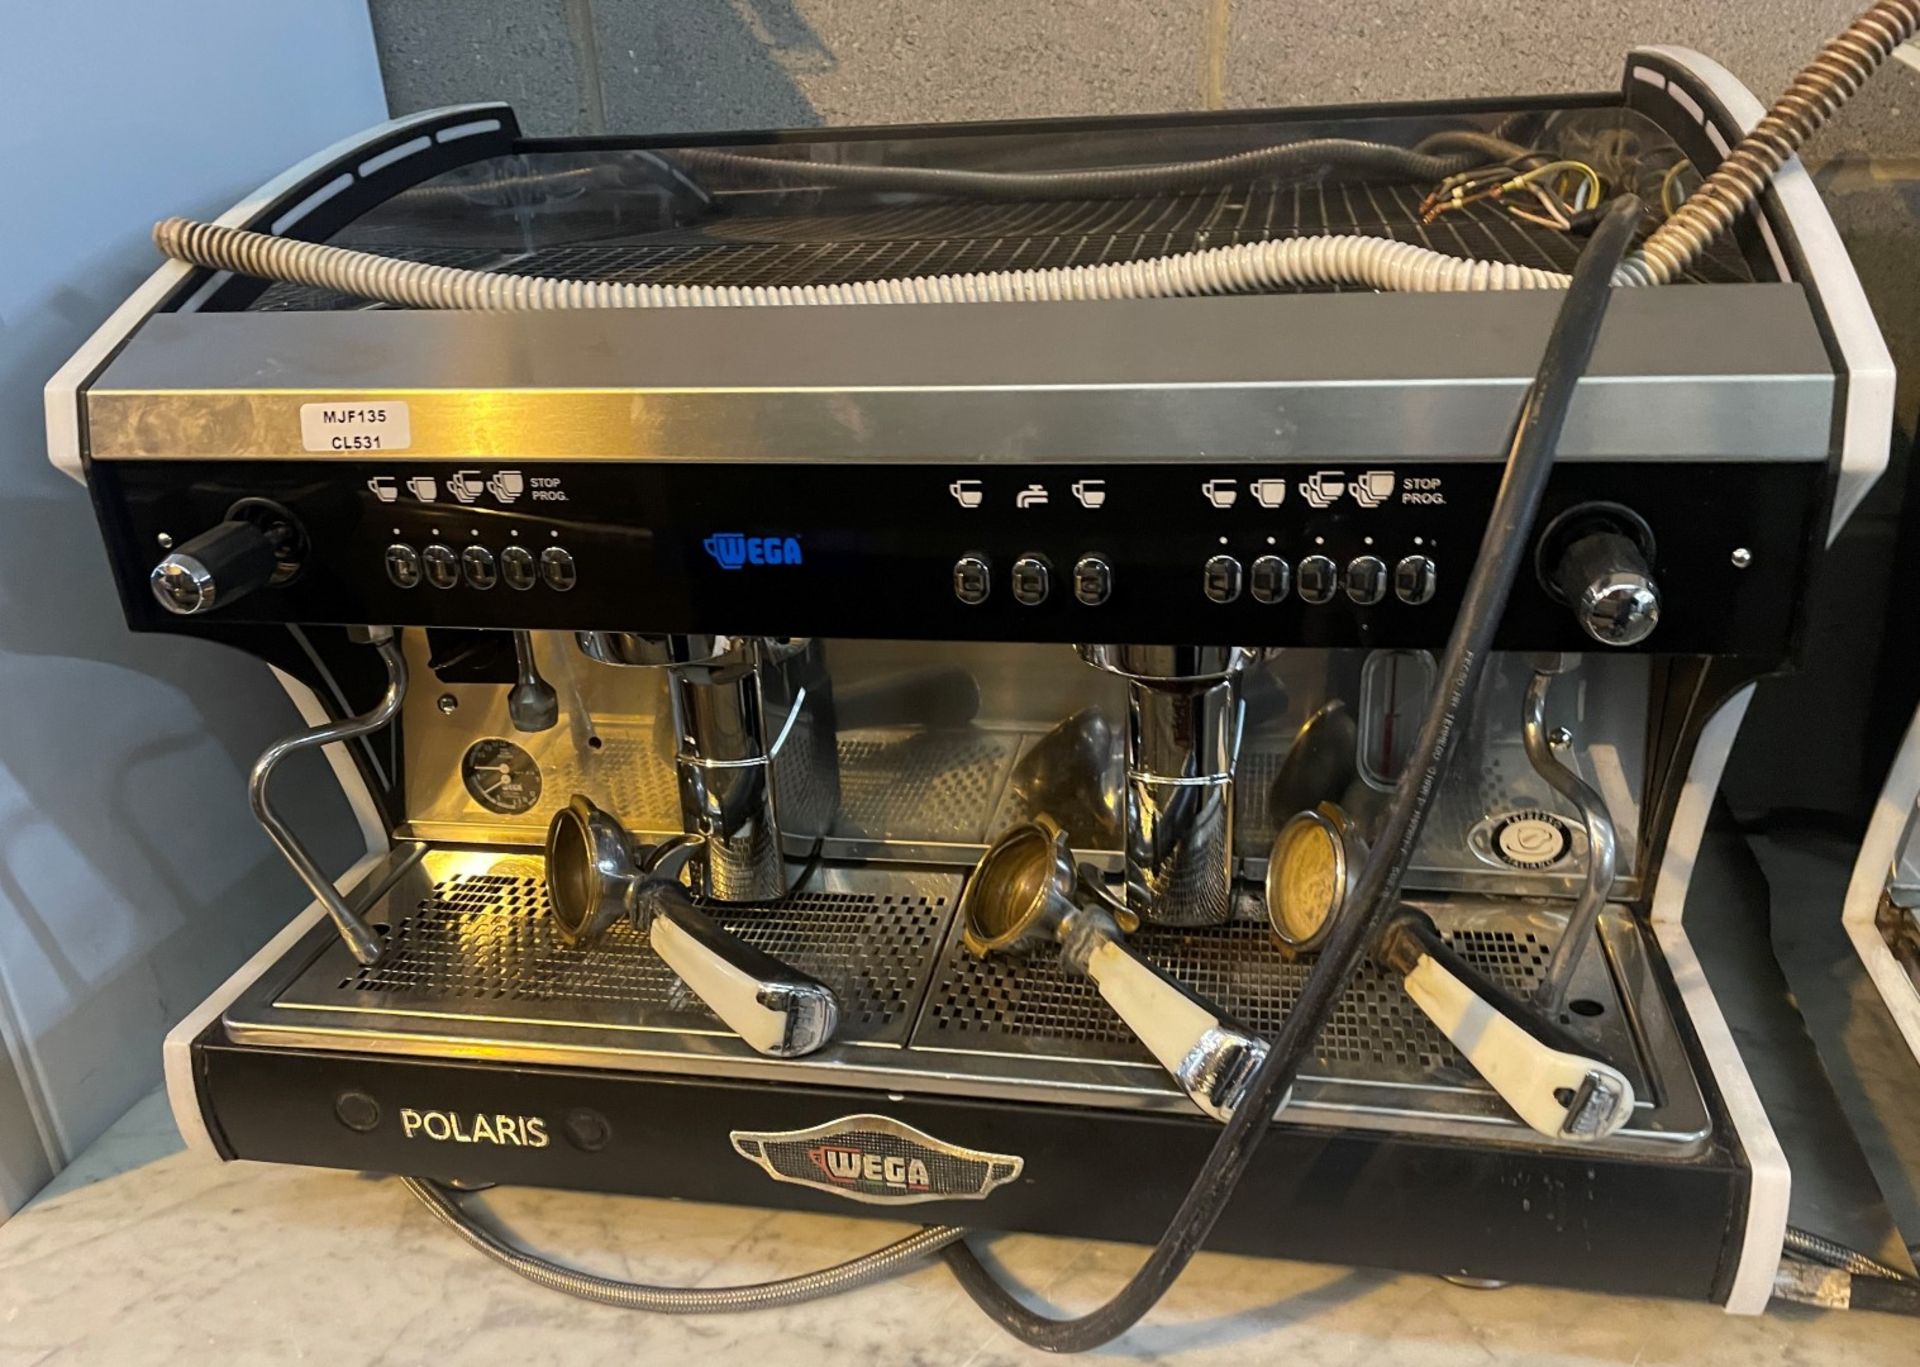 1 x Polaris Wega 2 Group Commercial Espresso Coffee Machine - Stainless Steel / Black Finish - Image 10 of 11